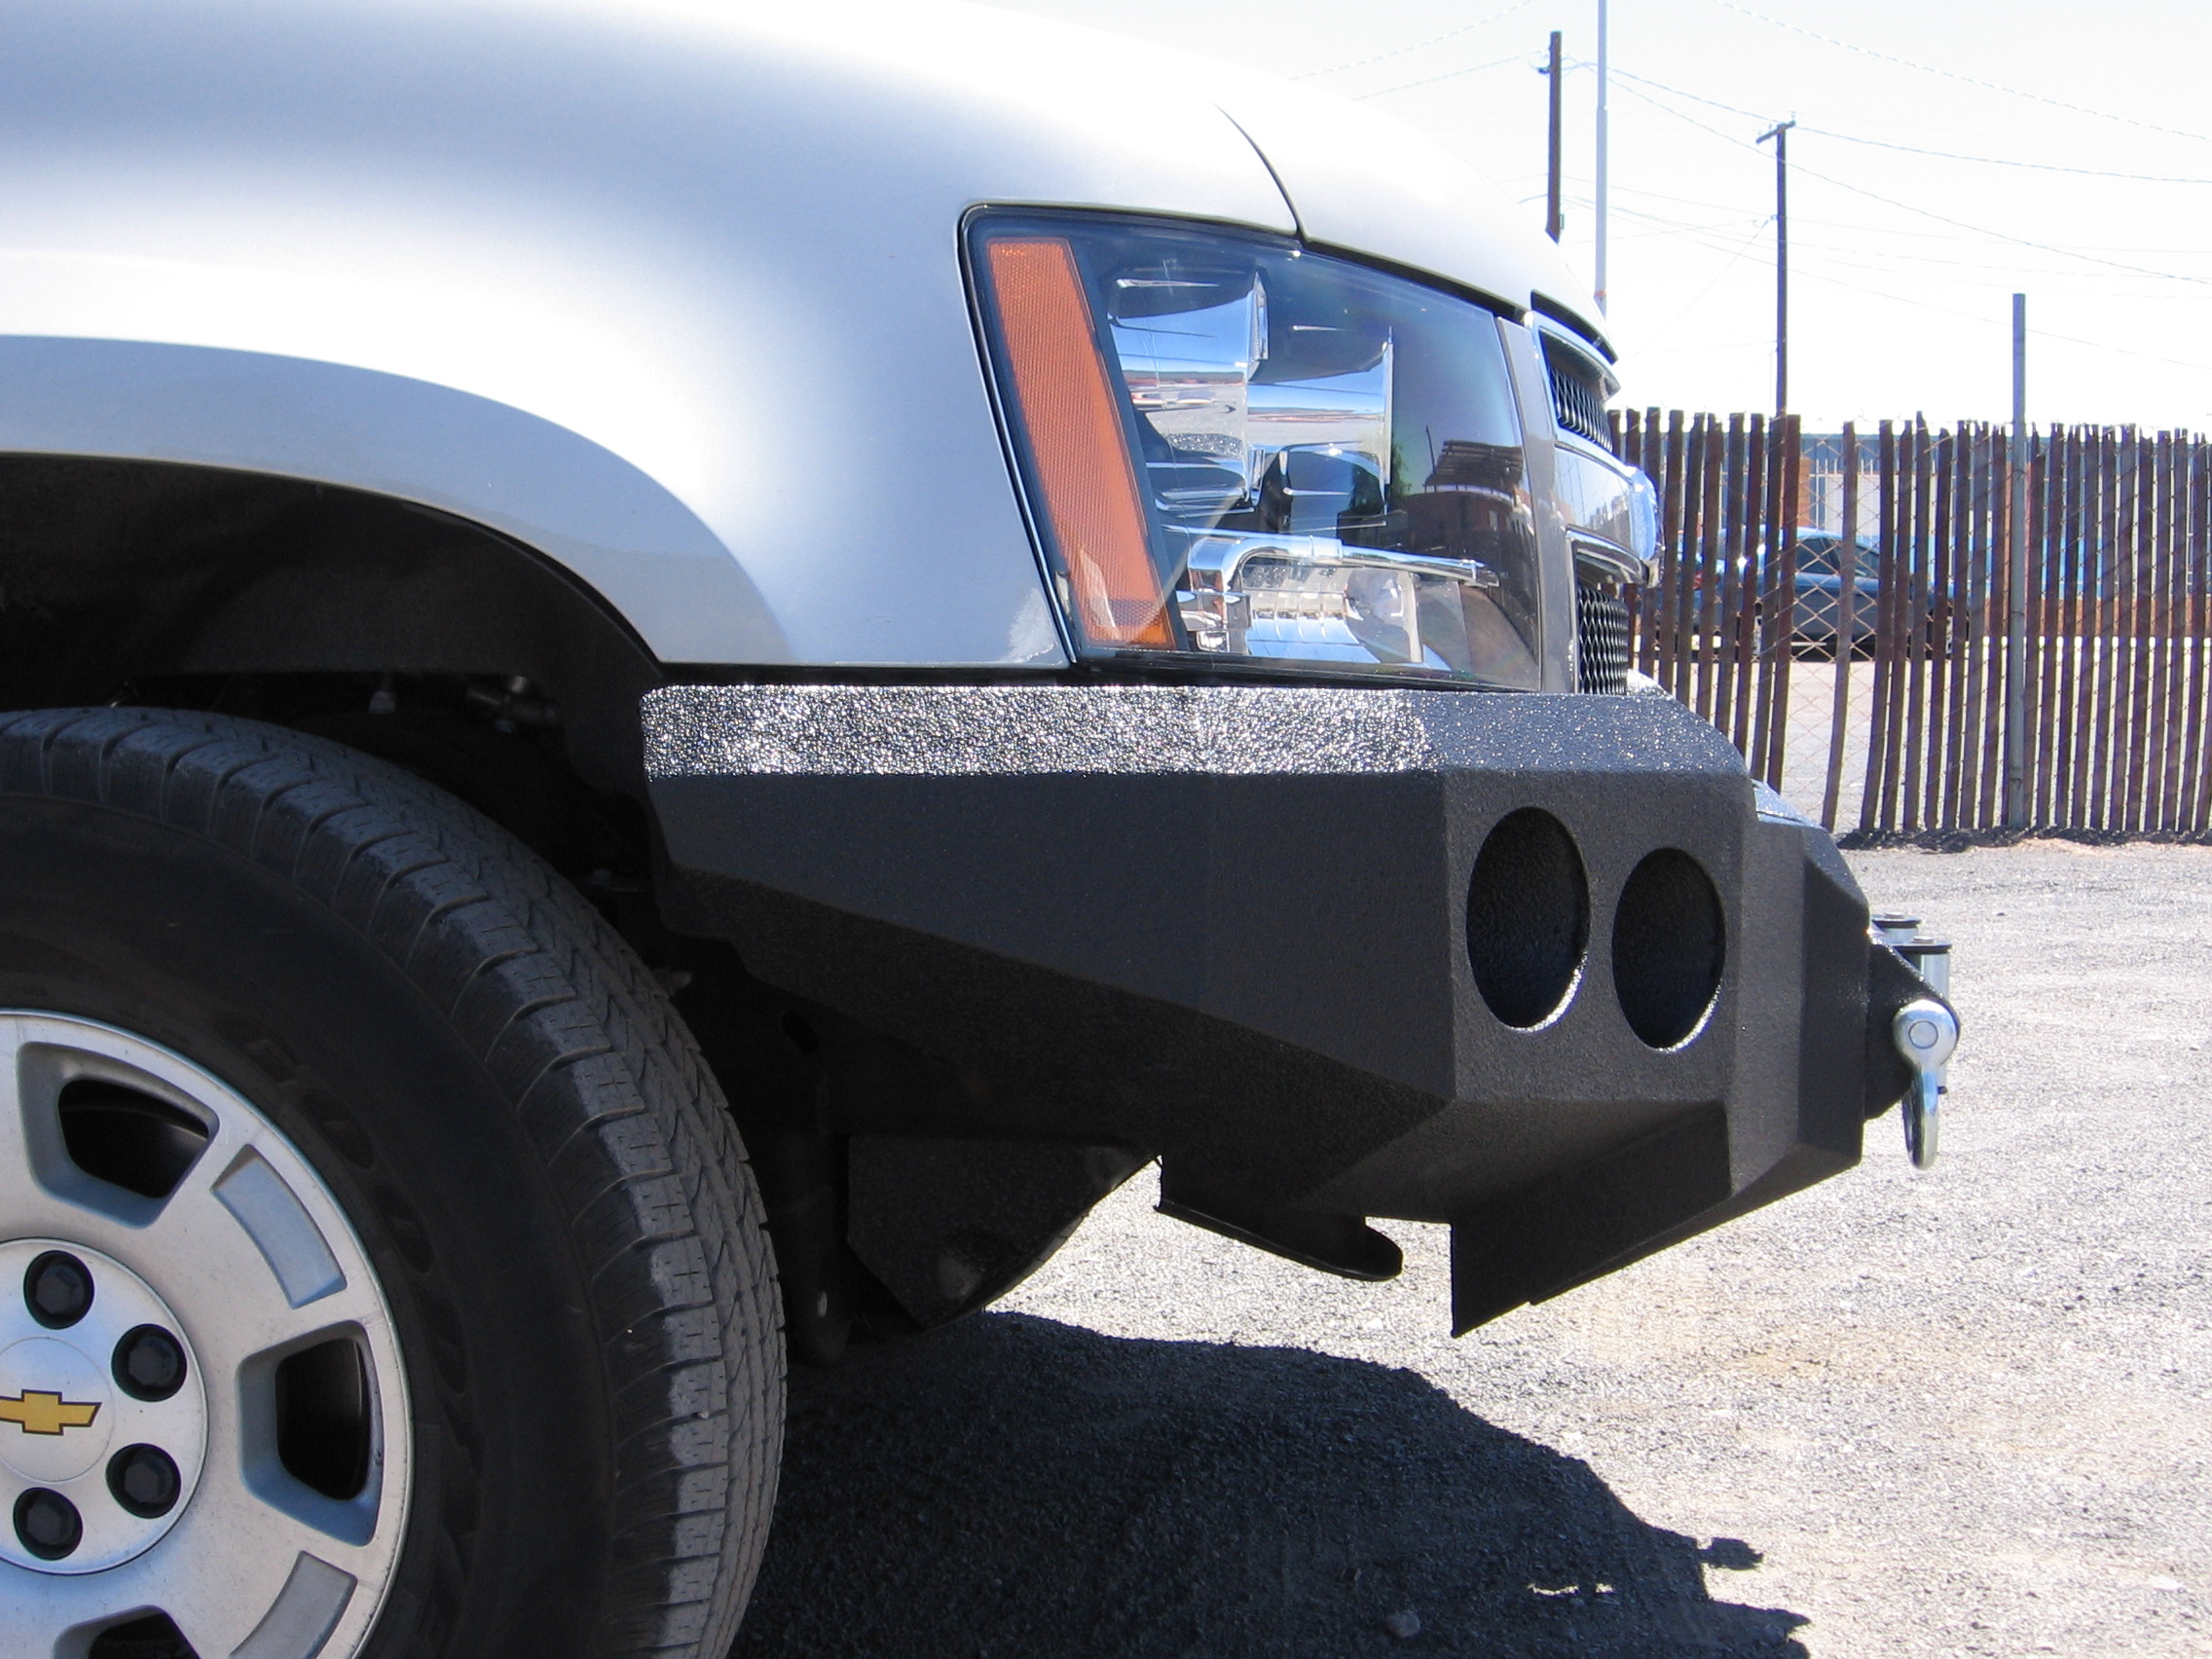 07-14 Chevrolet Tahoe front base bumper